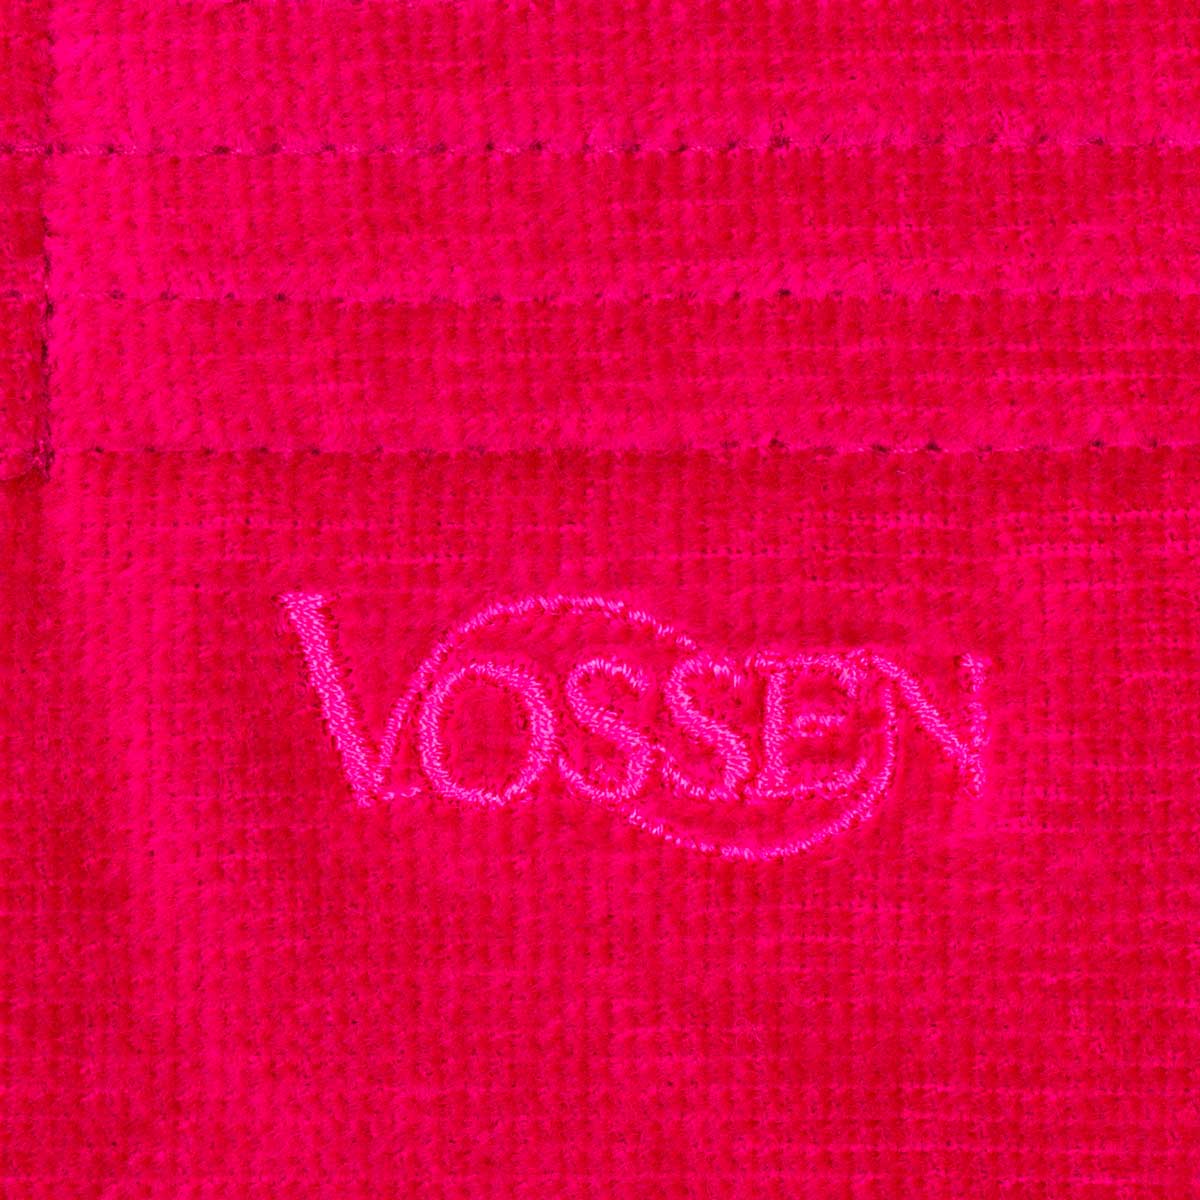 Халат велюровый с капюшоном Vossen Texas размер XS, фуксия Vossen 7990 05112 3770 3440 XS - фото 4